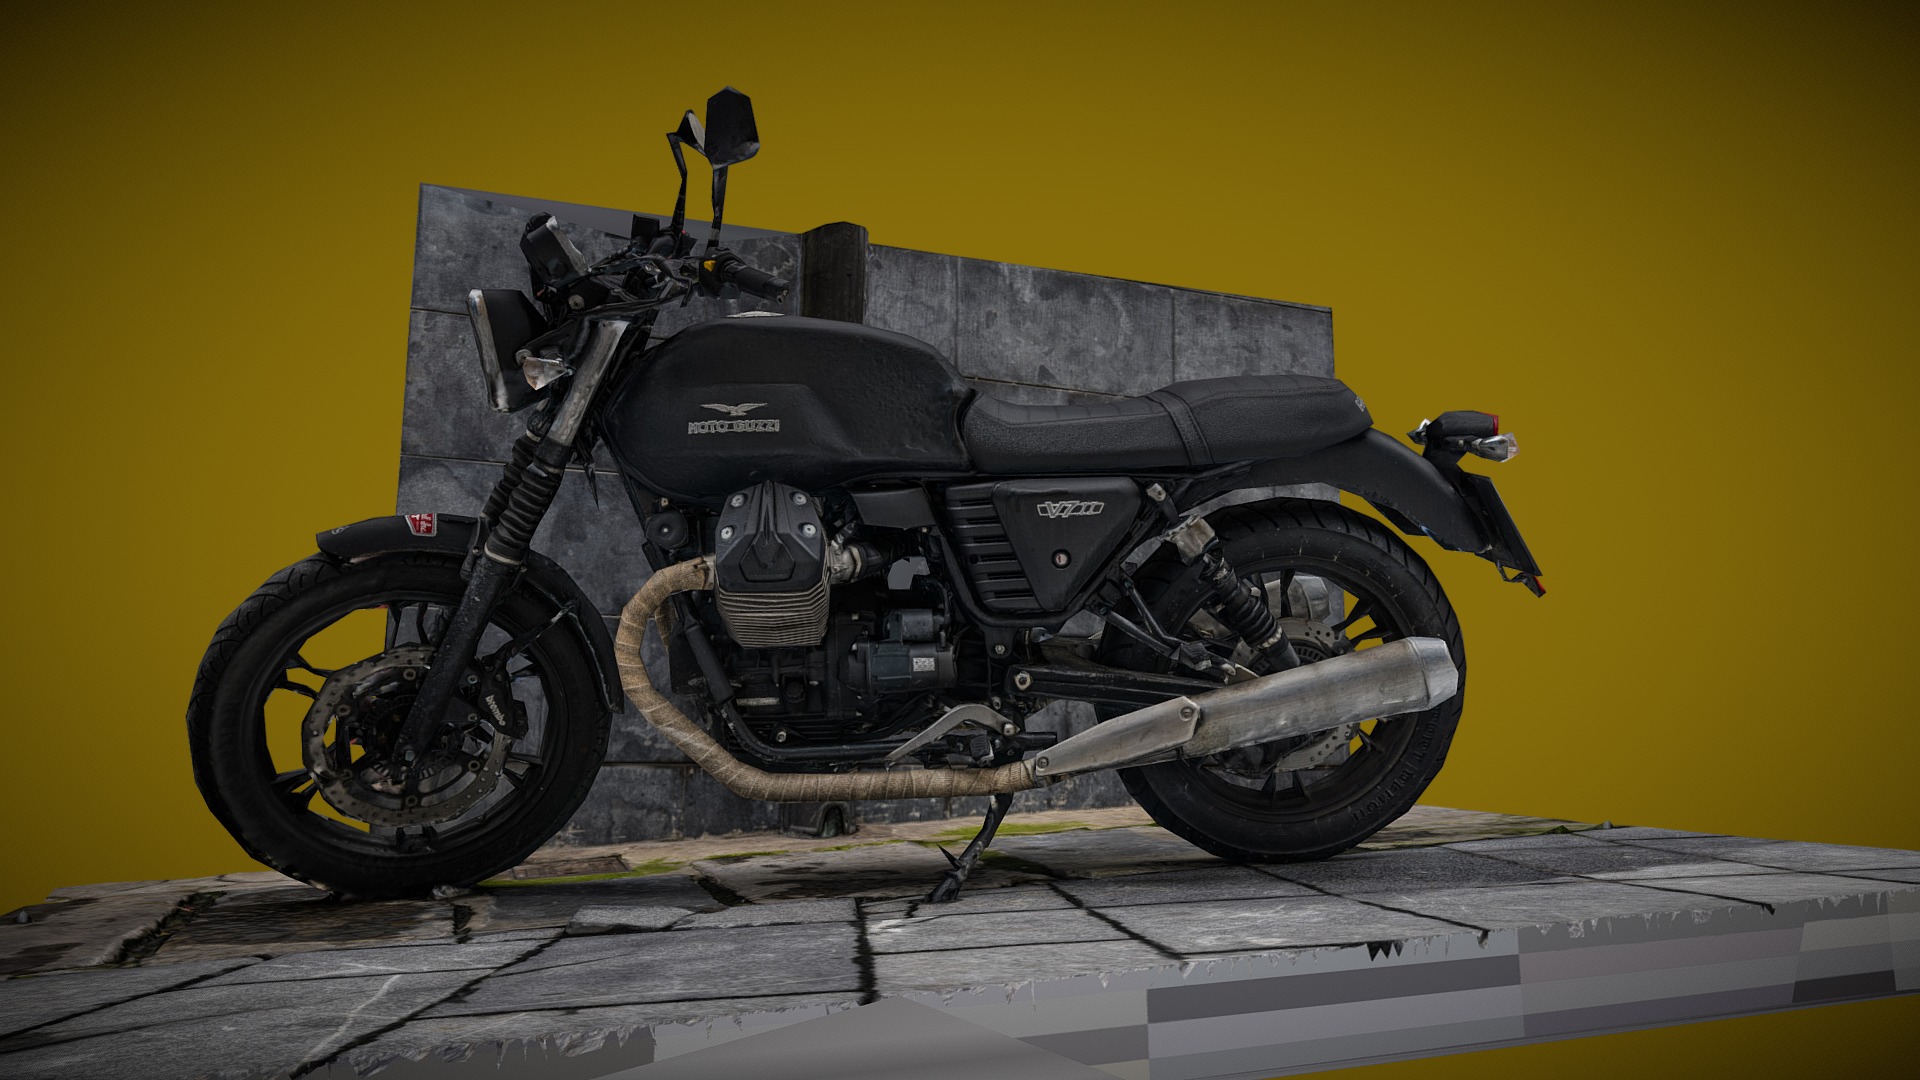 3D model 10K- Moto Guzzi v7 photogrammetry scan remake - This is a 3D model of the 10K- Moto Guzzi v7 photogrammetry scan remake. The 3D model is about a motorcycle on a platform.